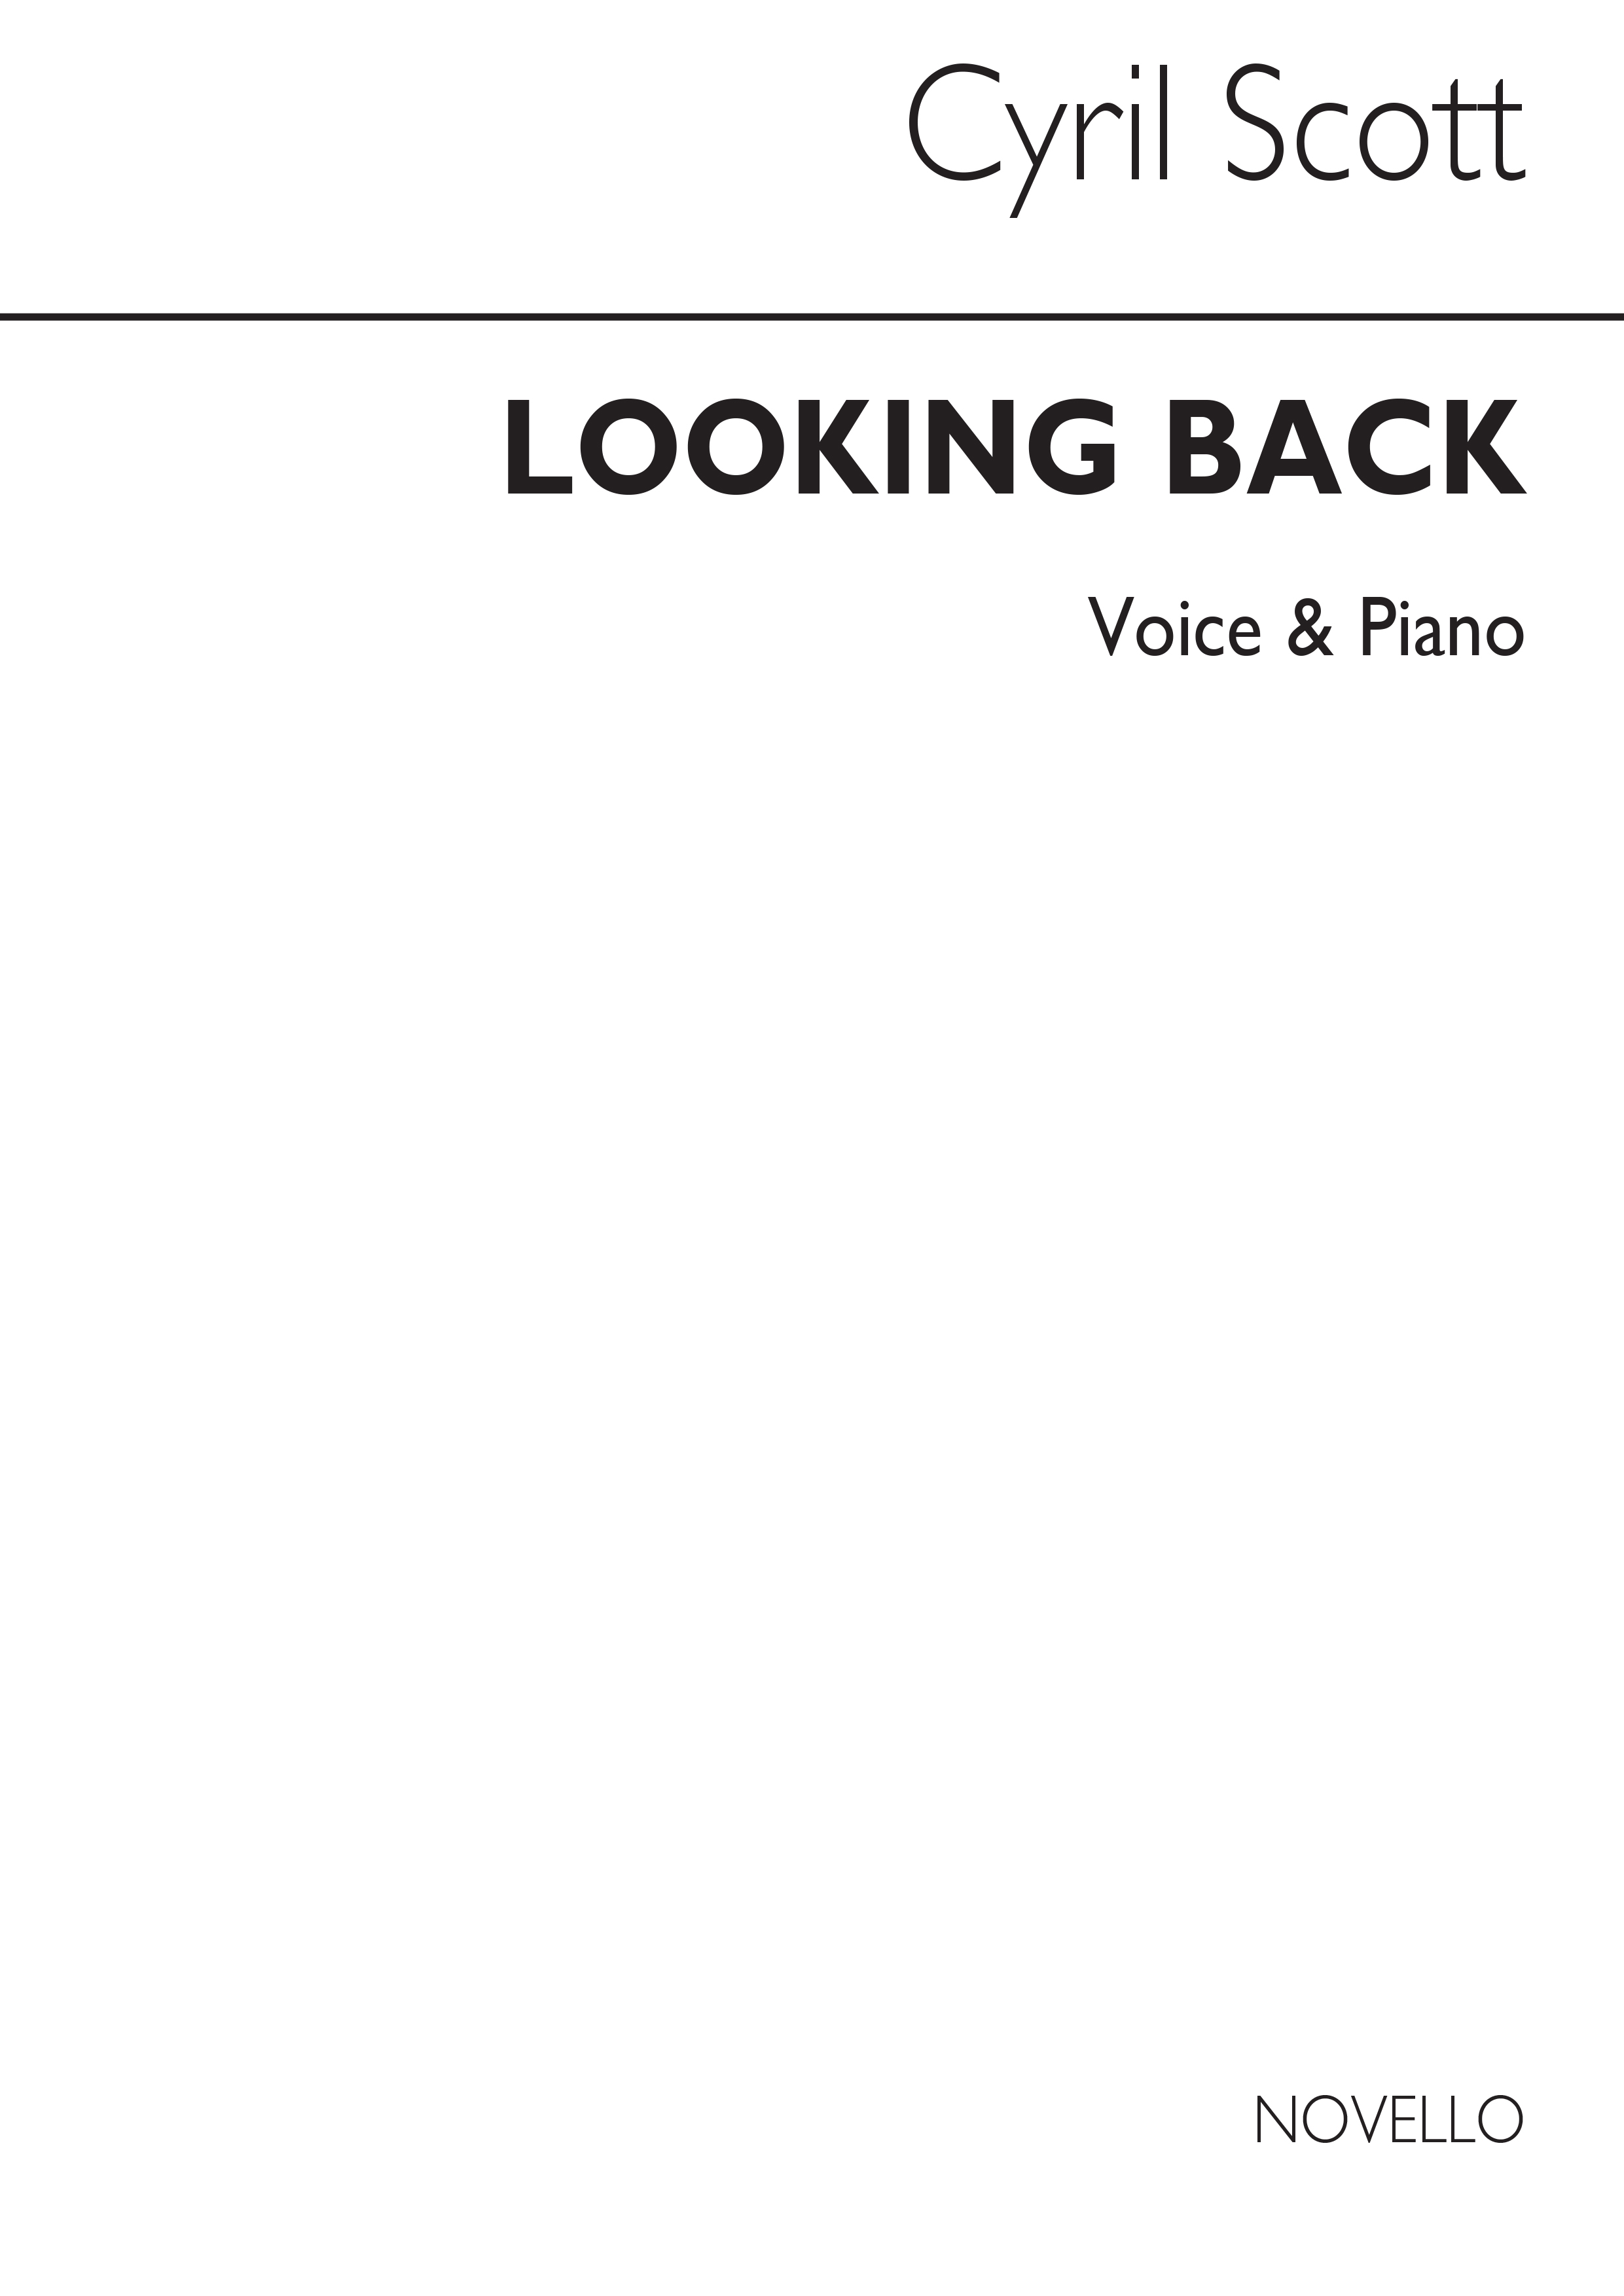 Cyril Scott: Looking Back-medium Voice/Piano (Key-e Flat): Medium Voice: Vocal